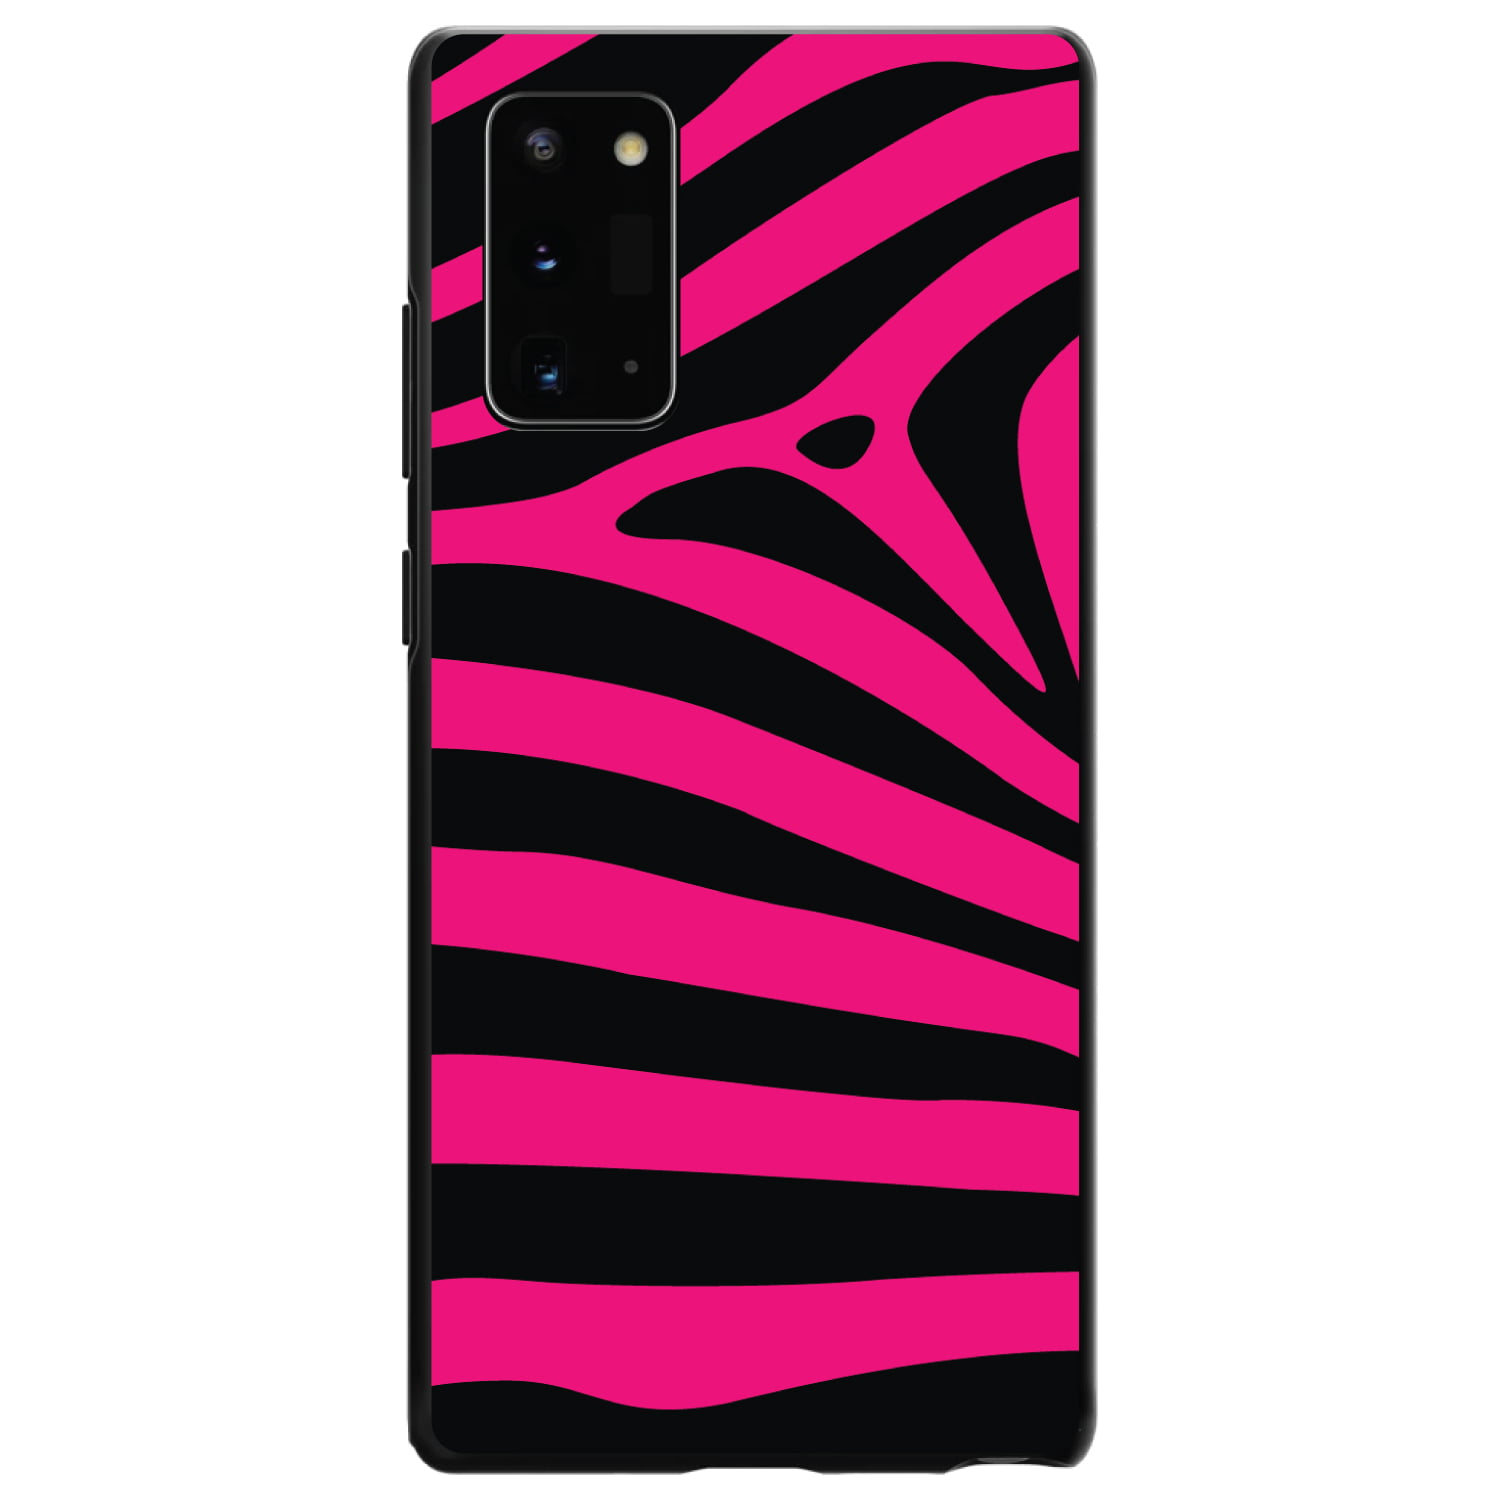 DistinctInk Case for Samsung Galaxy Note 20 ULTRA (6.9" Screen) - Custom Ultra Slim Thin Hard Black Plastic Cover - Black Hot Pink Zebra Skin Stripes